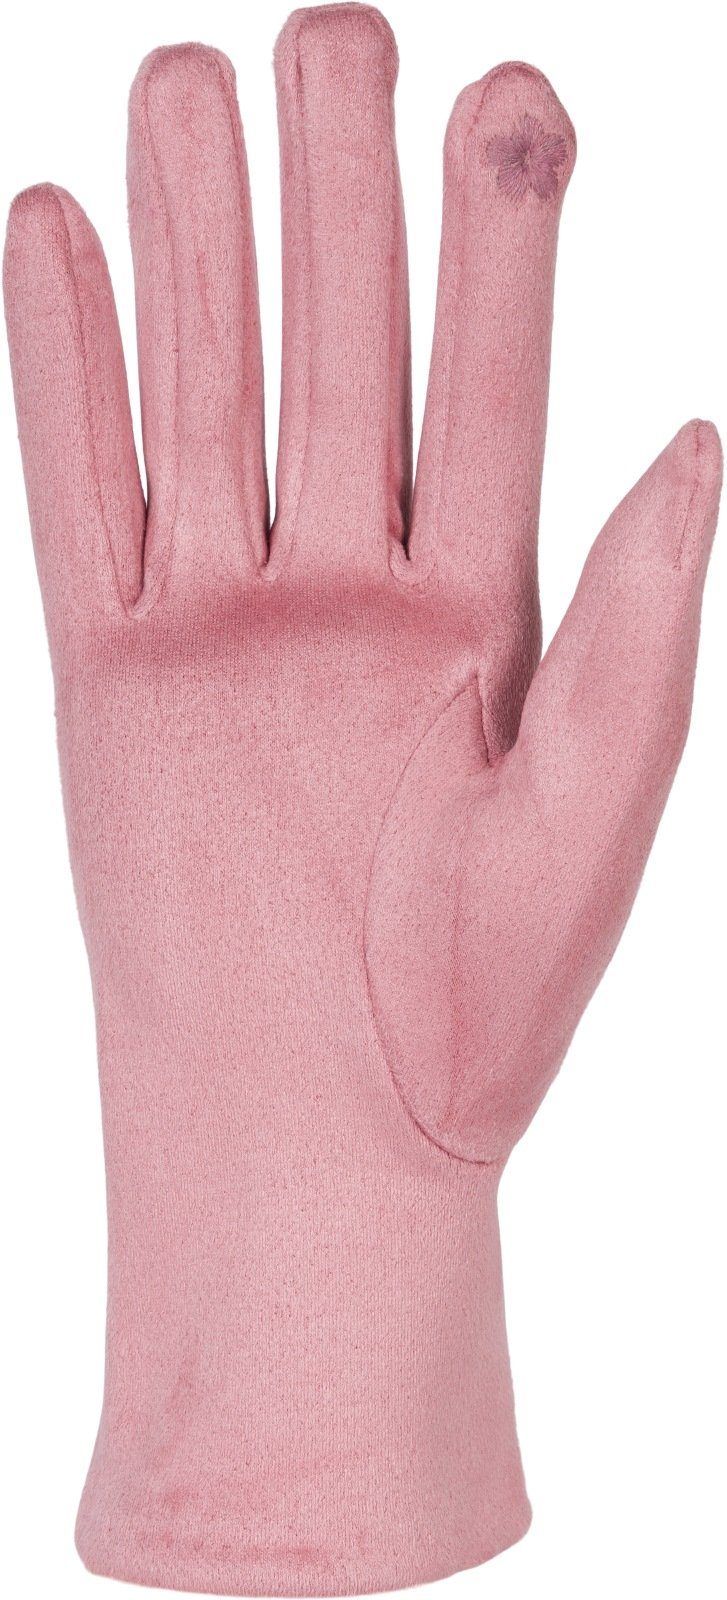 Handschuhe Ziernähte Fleecehandschuhe Touchscreen styleBREAKER Einfarbige Altrose